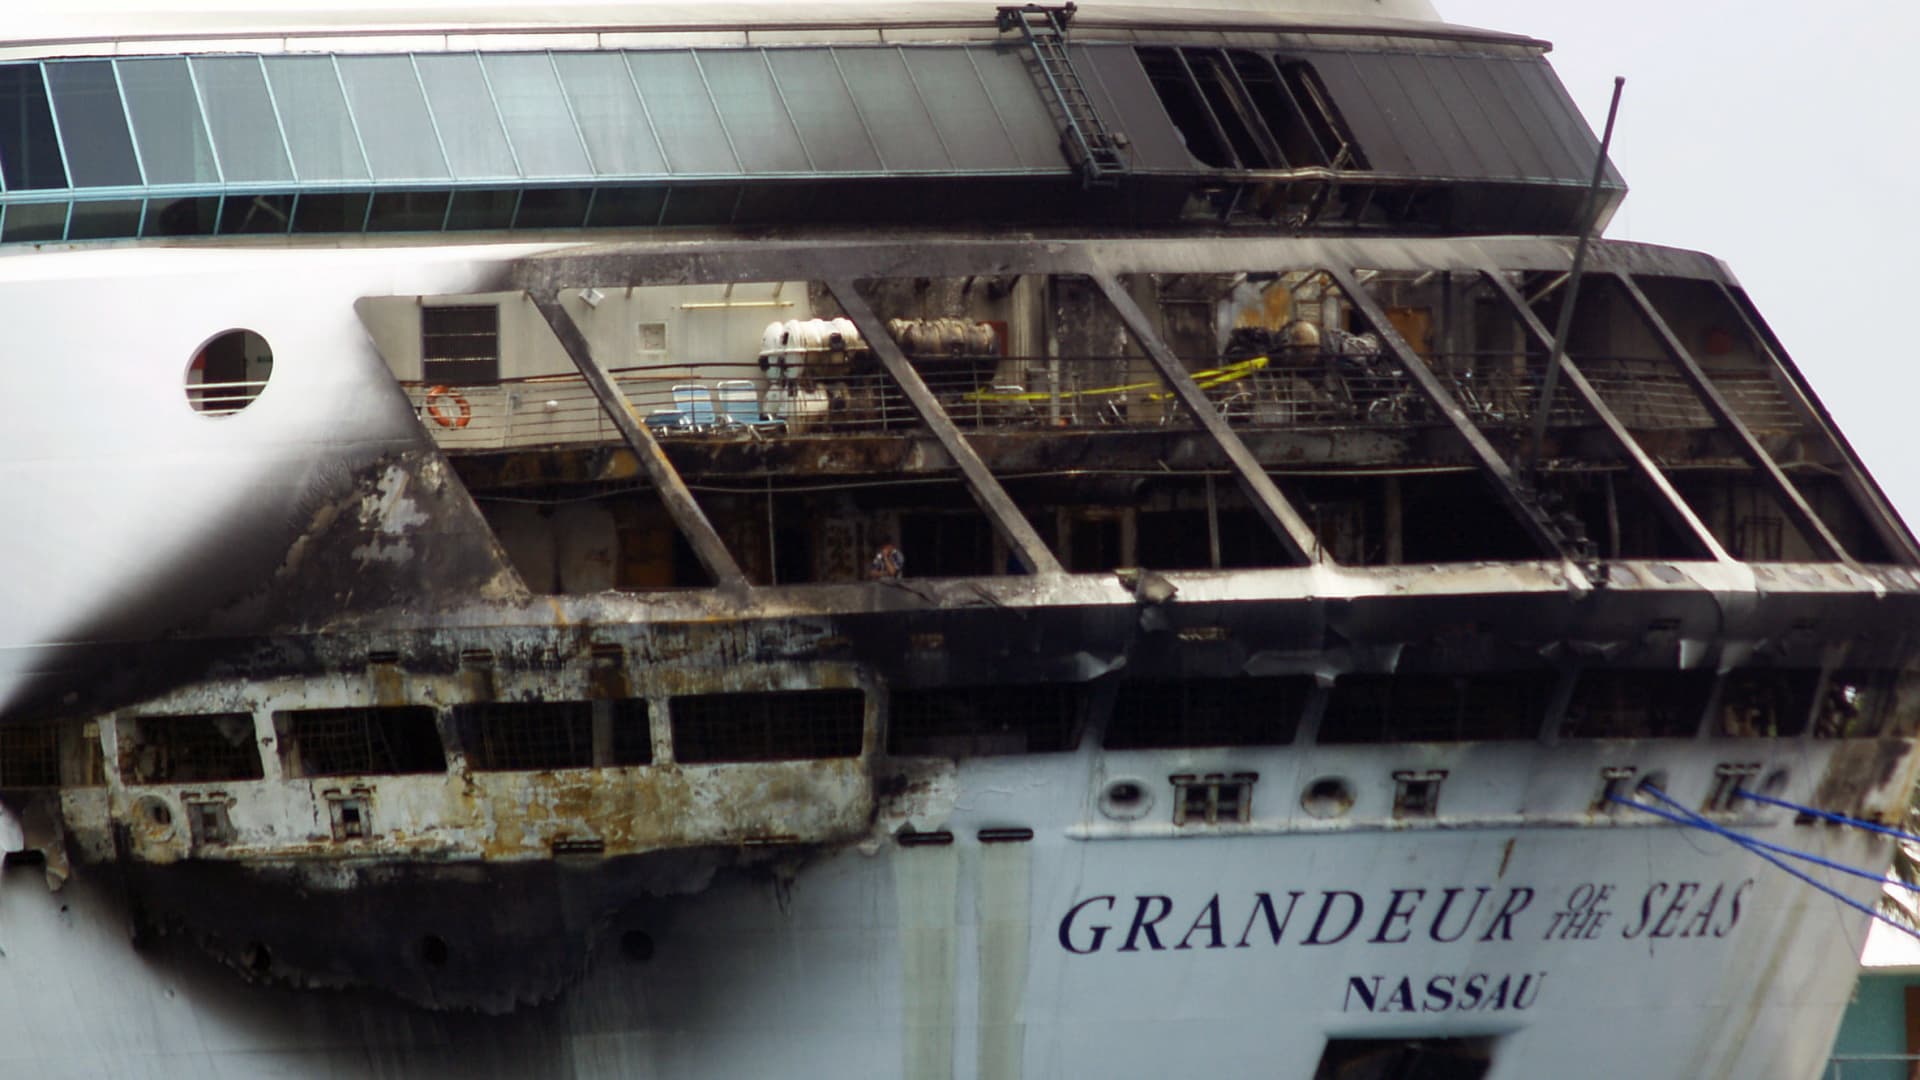 cruise ship fire 1990s